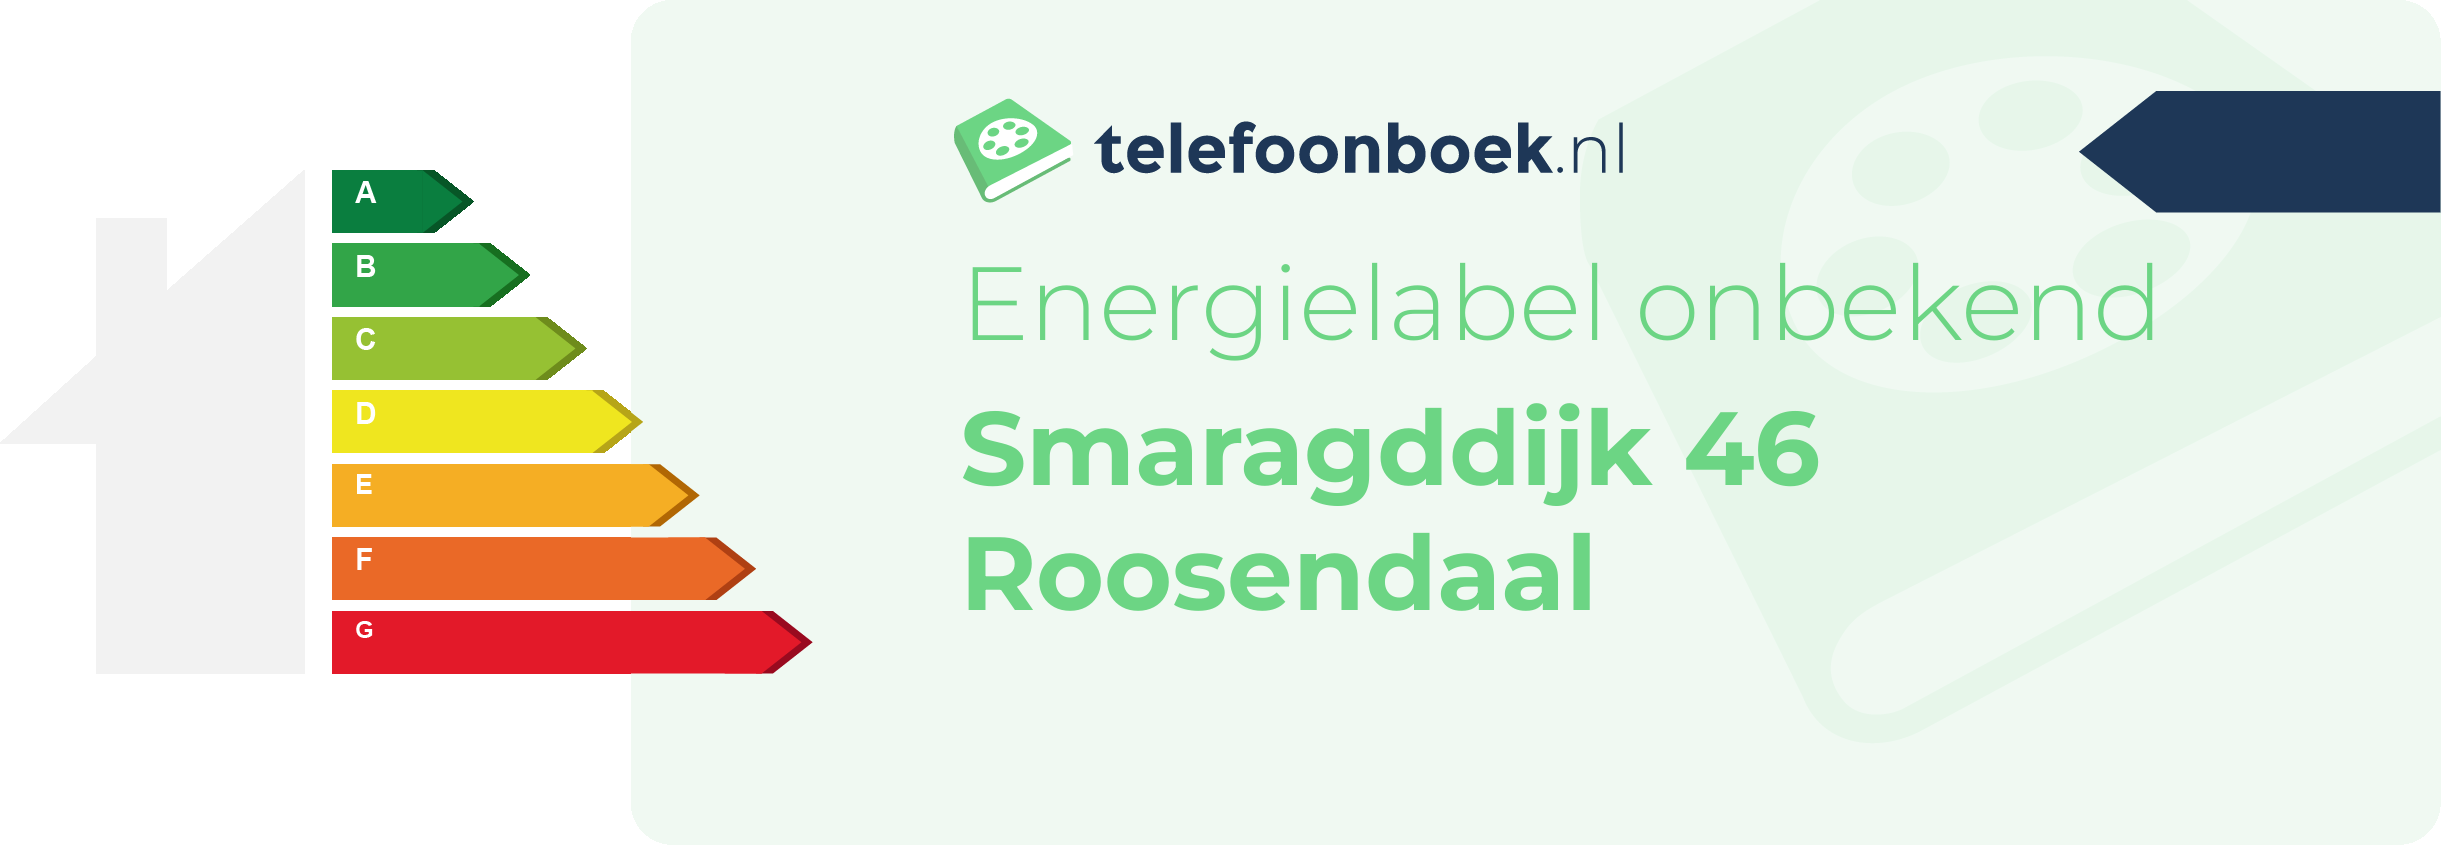 Energielabel Smaragddijk 46 Roosendaal